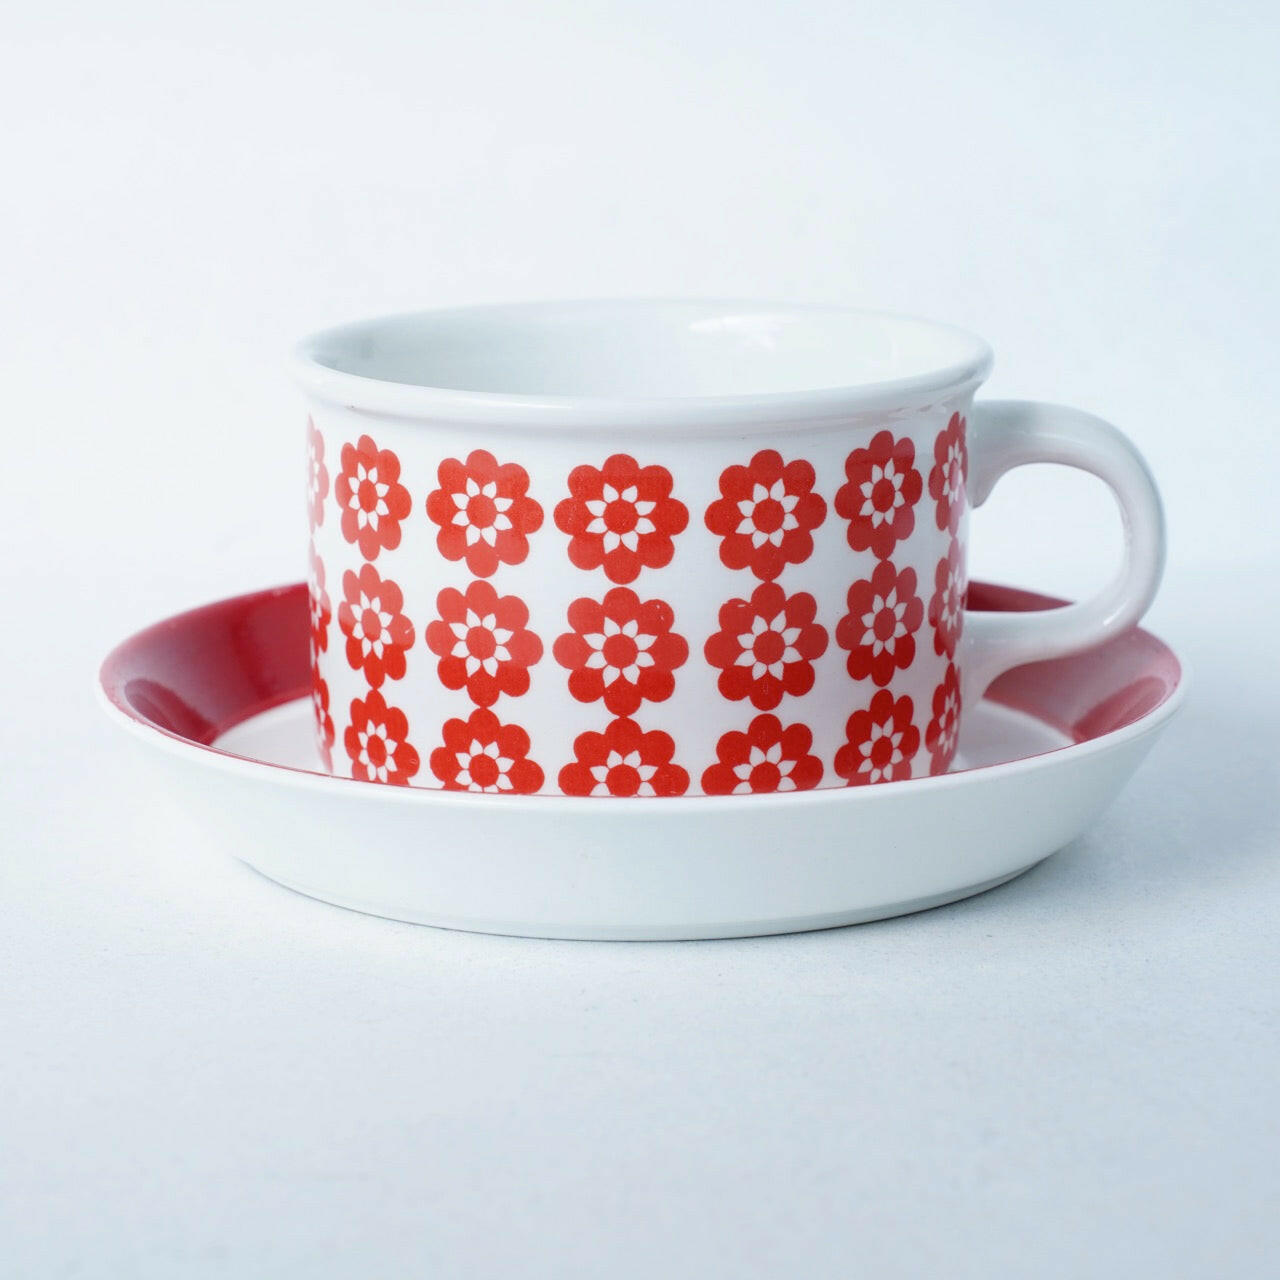 Gustavsberg Malva tea cup and saucer